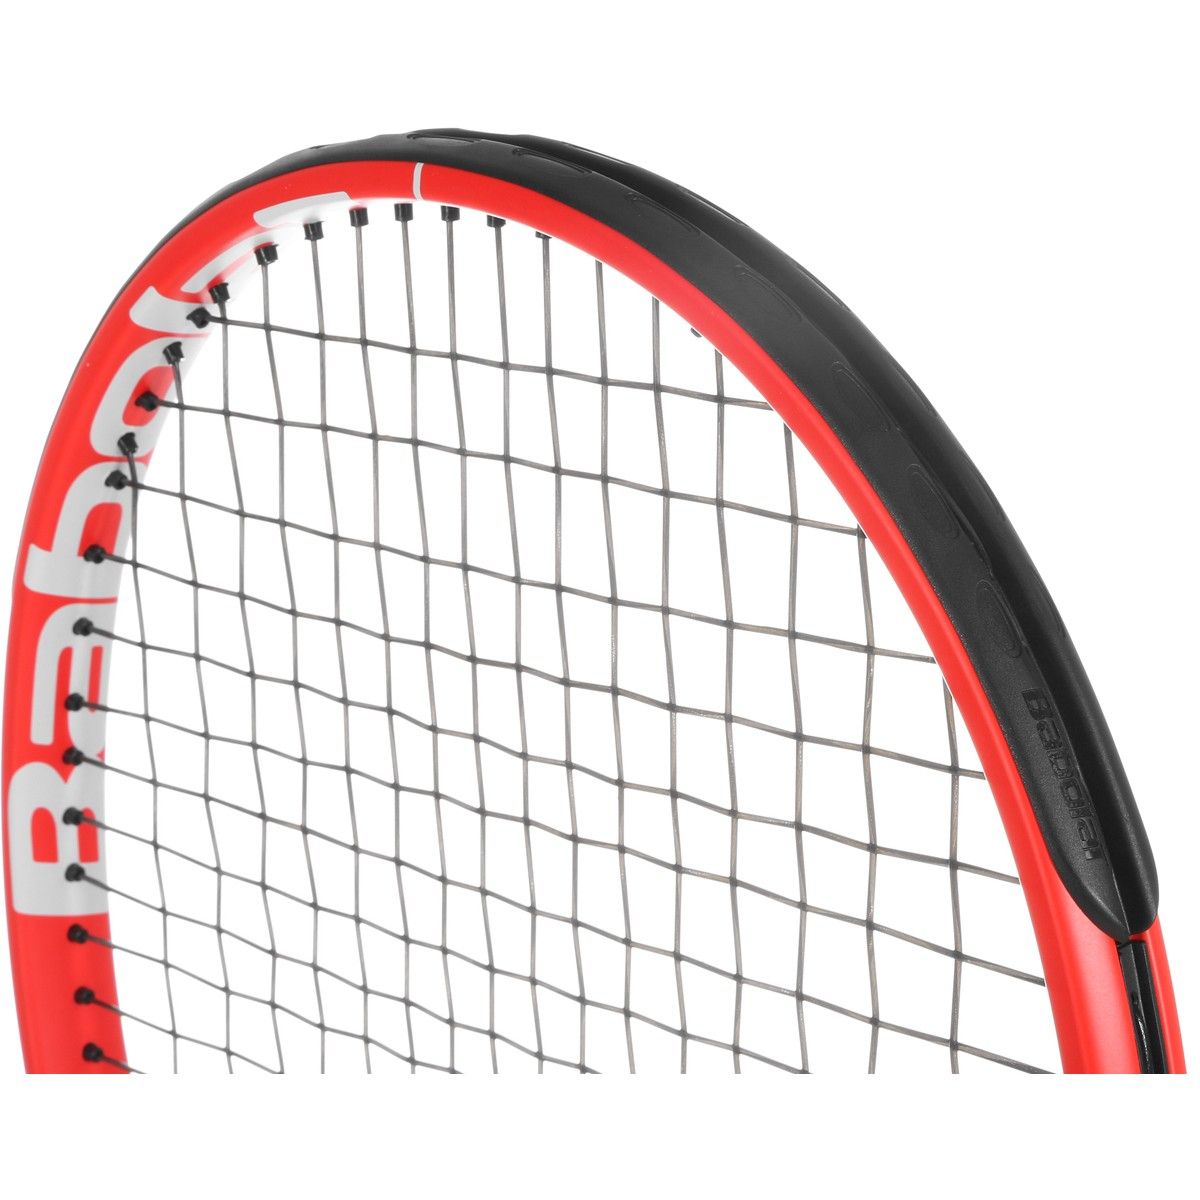 Babolat Strike 24 junior Tennis Racquet 140432-151